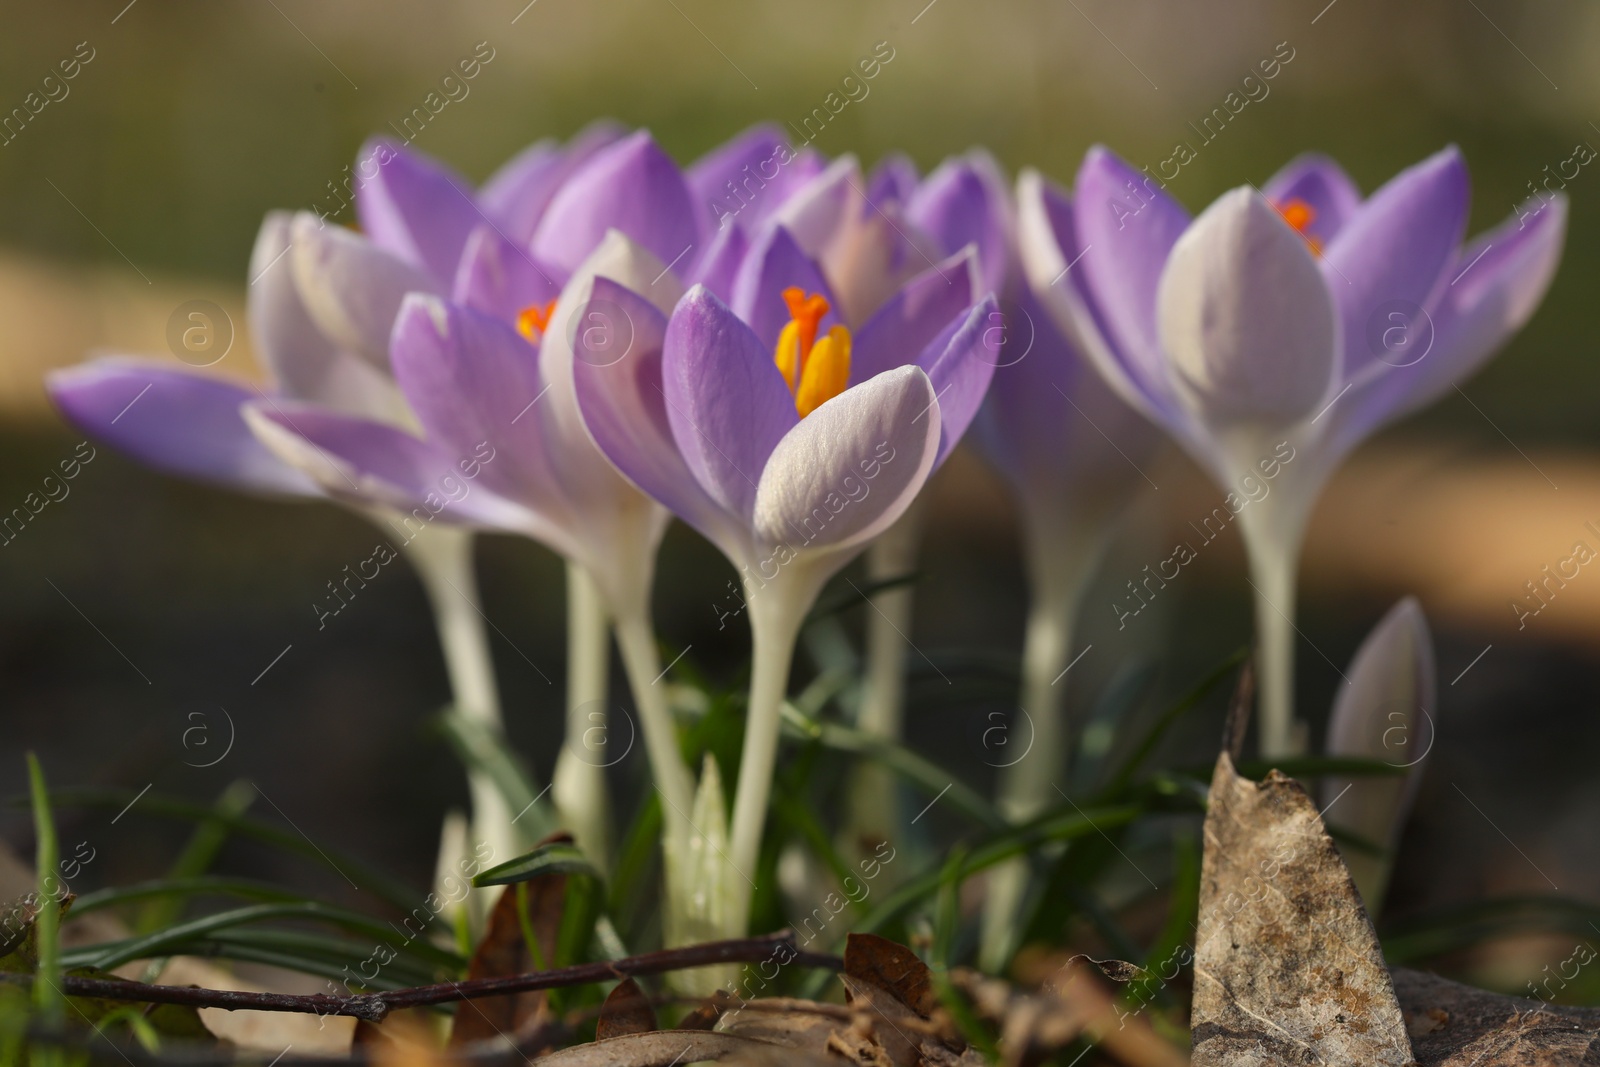 Photo of Beautiful crocus flowers growing outdoors, closeup view